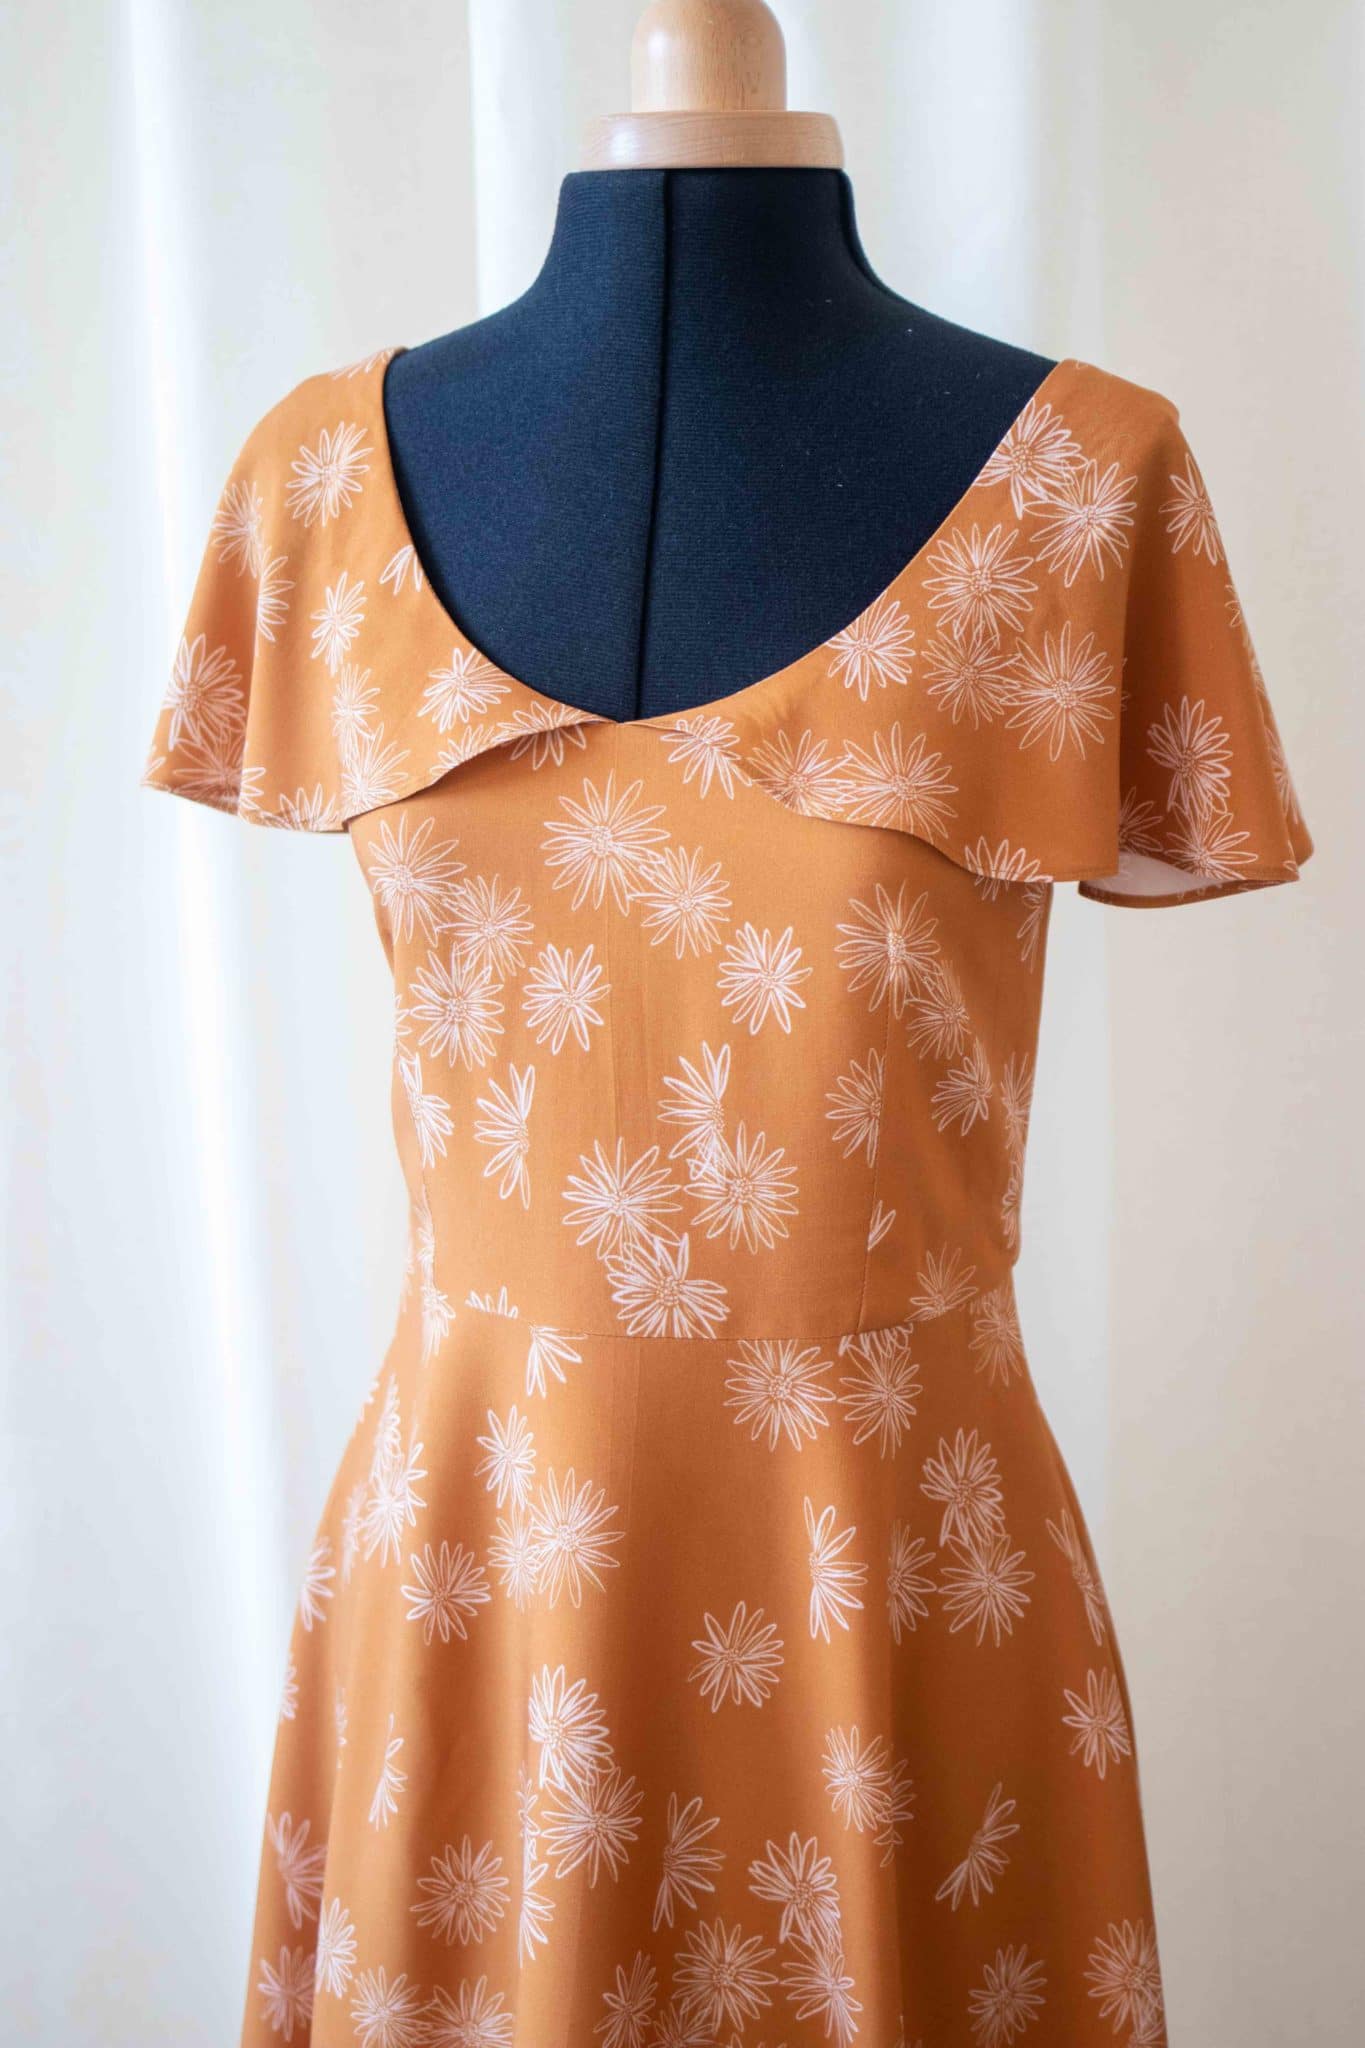 Lise Tailor - Belle Des Champs Dress Sewing Pattern